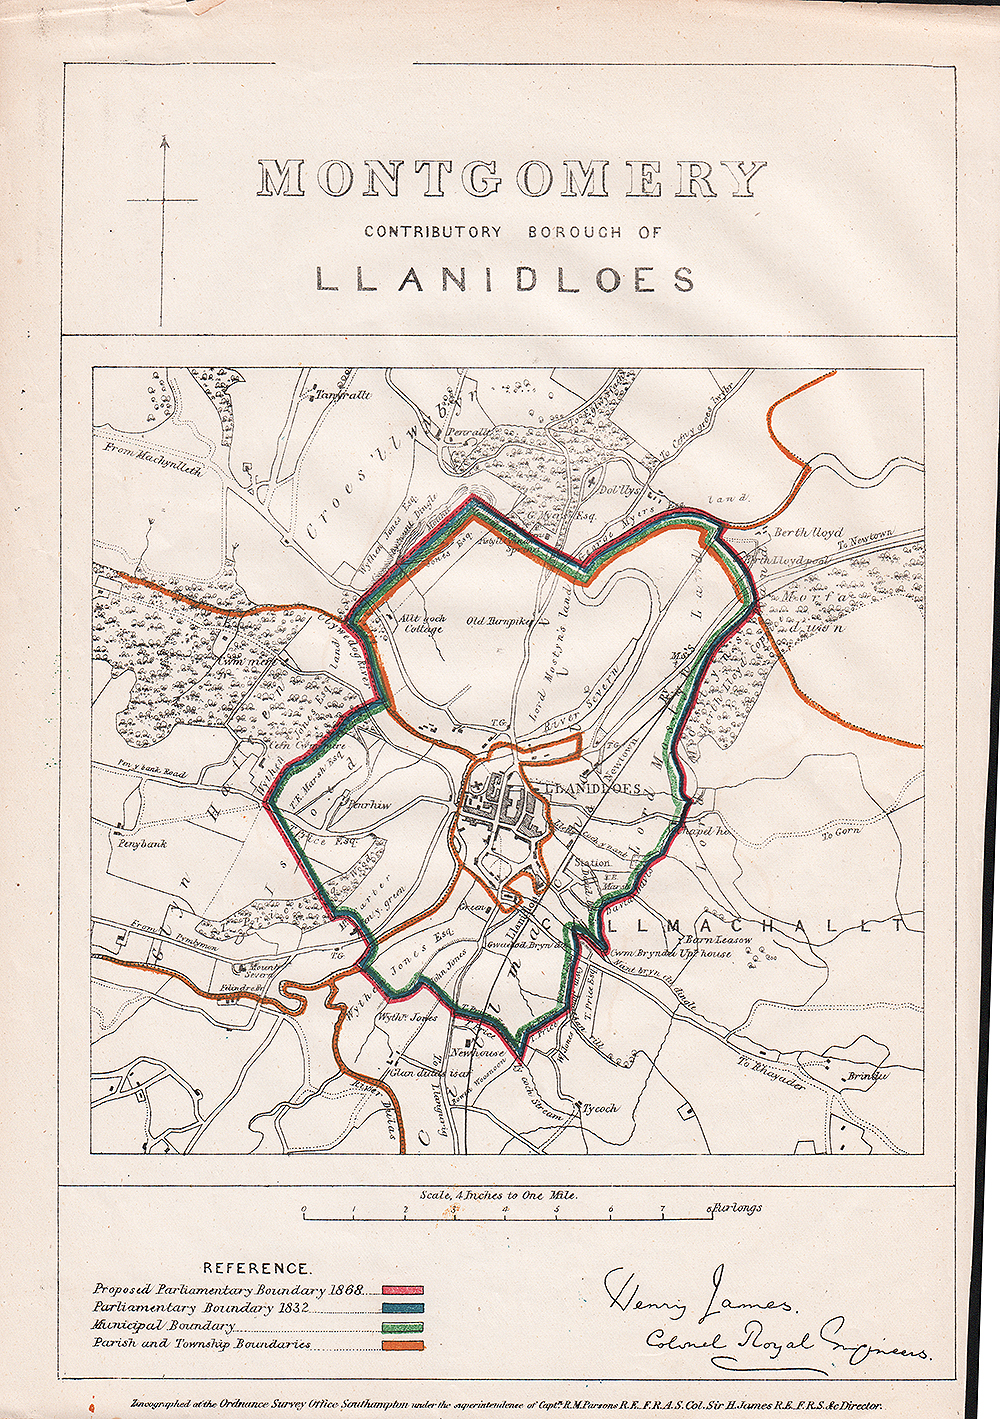 Contibutory Borough of Llanidloes